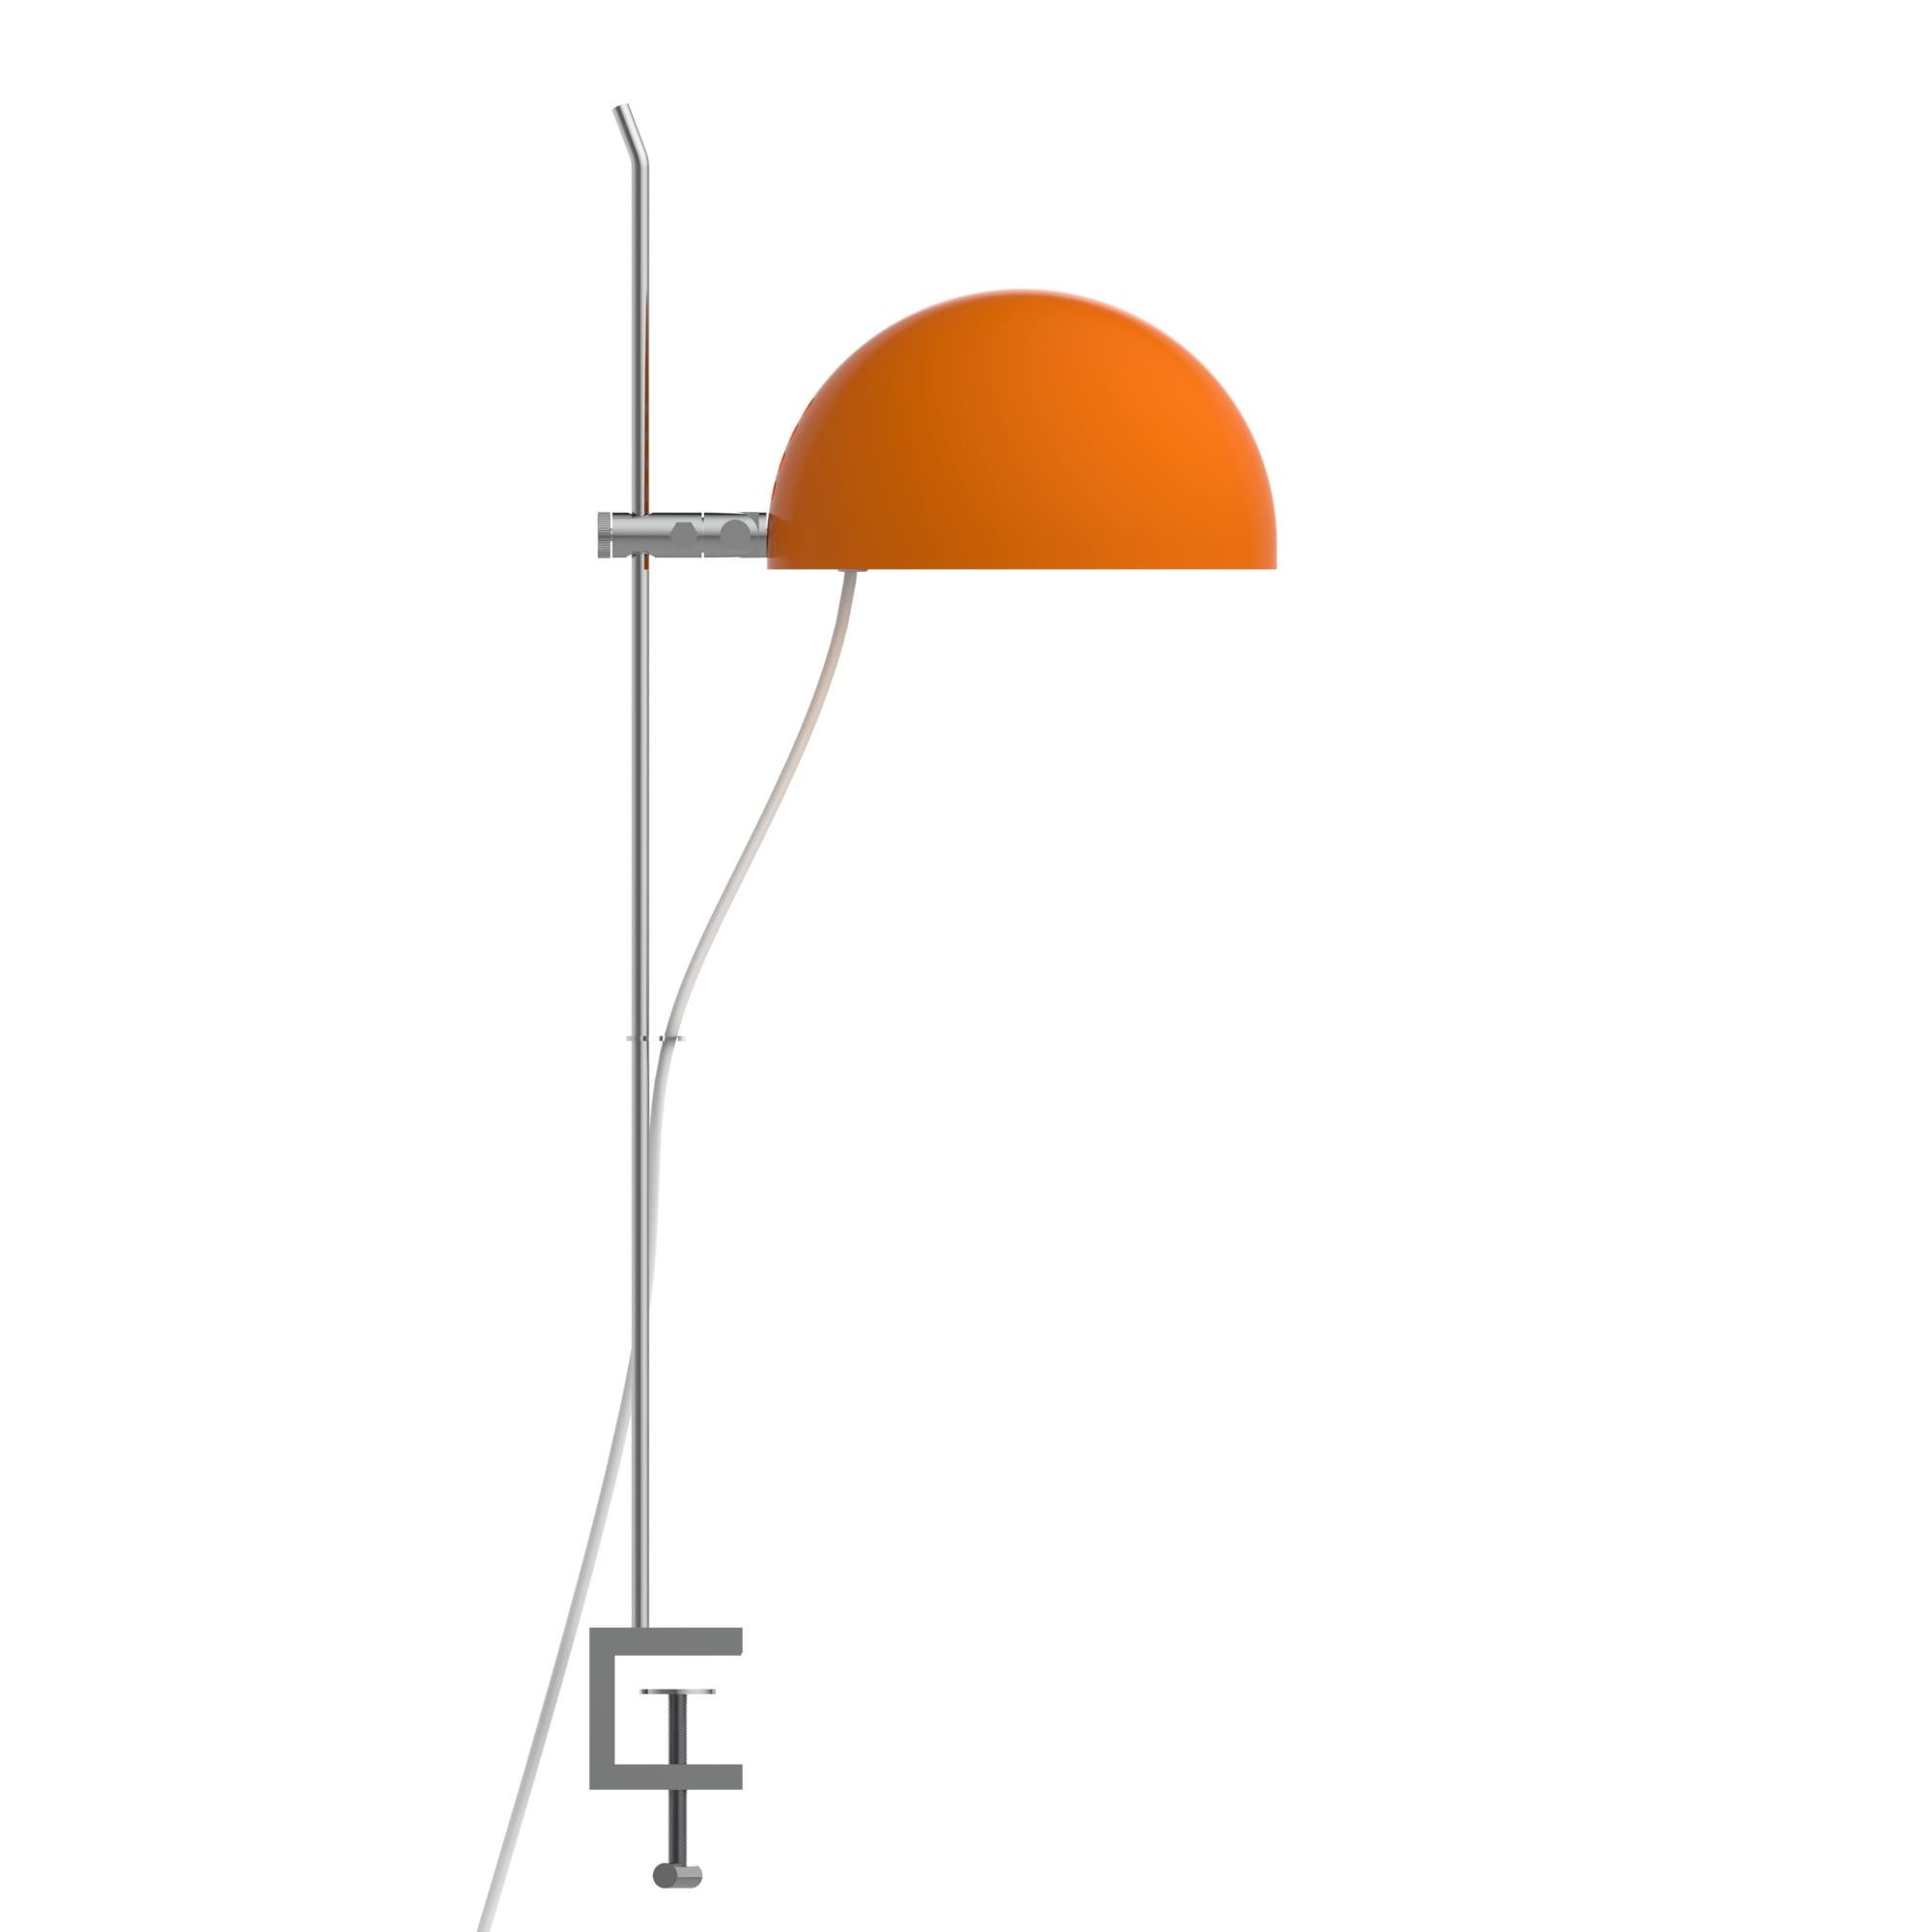 Alain Richard 'A22F' Task Lamp in Red for Disderot For Sale 3